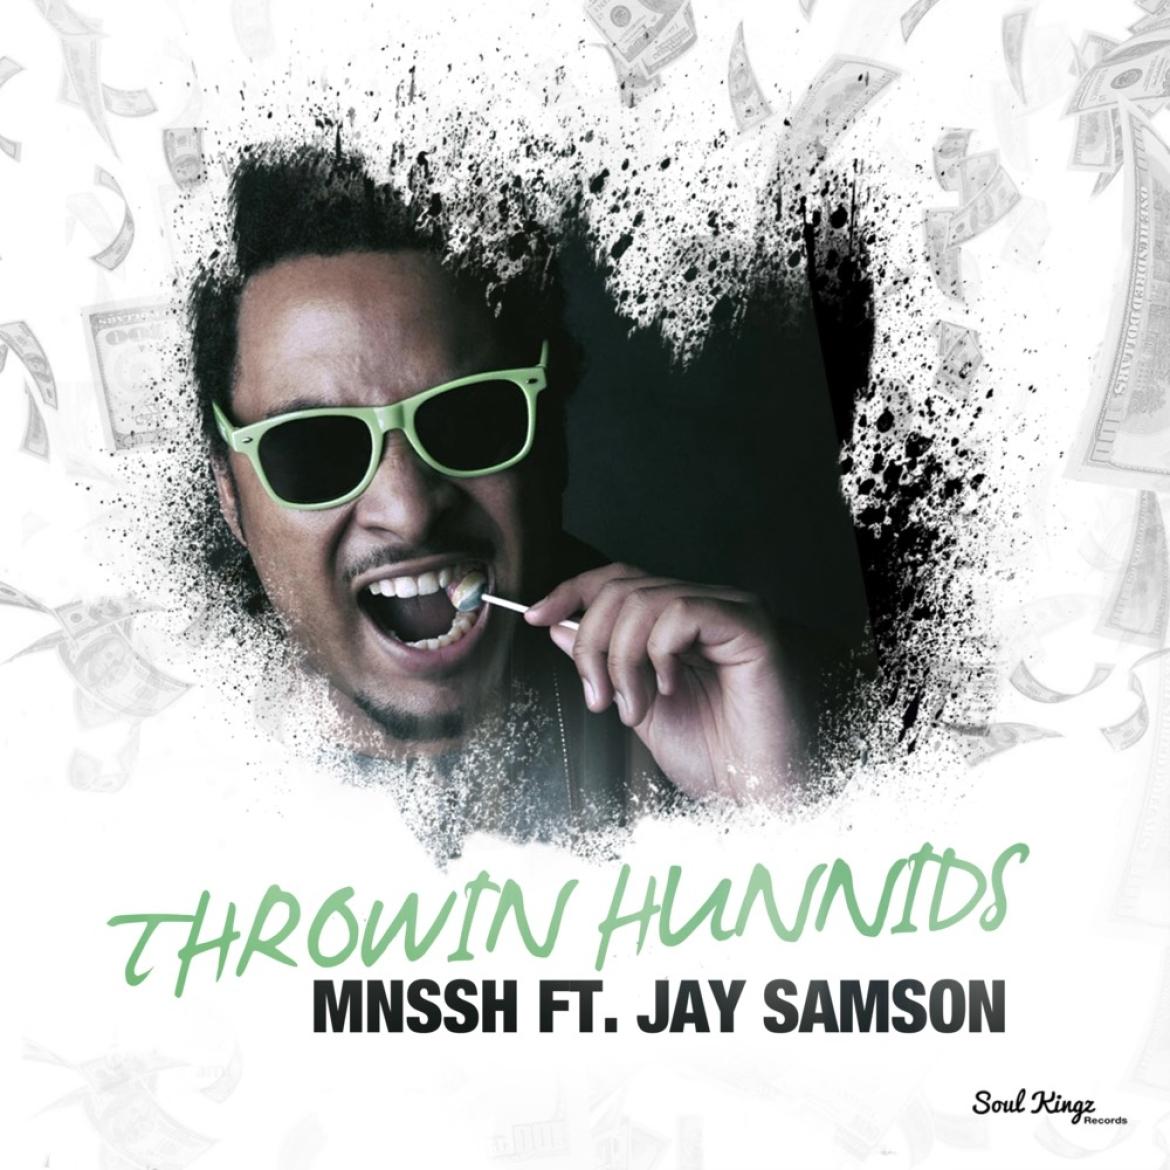 MNSSH Ft. Jay Samson - Throwin' Hunnids Artwork